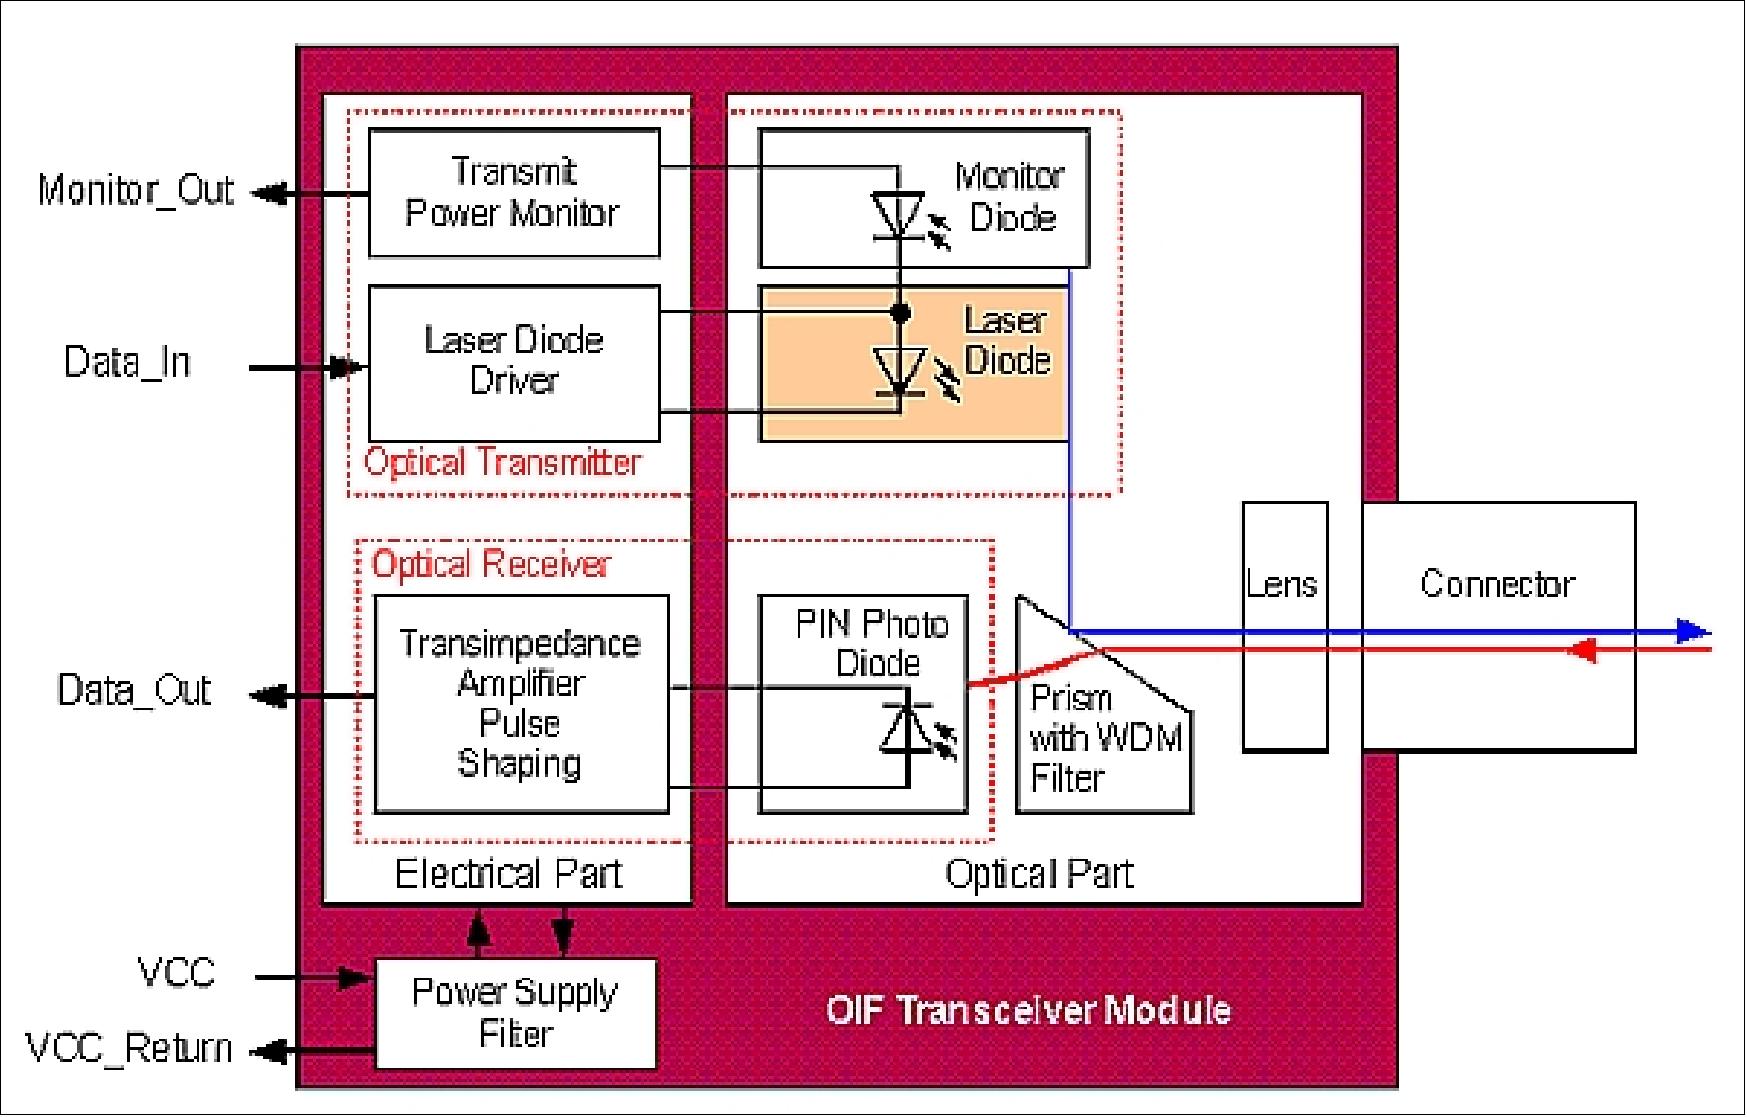 Figure 26: Block diagram of the optical transceiver (image credit: Tesat Spacecom)